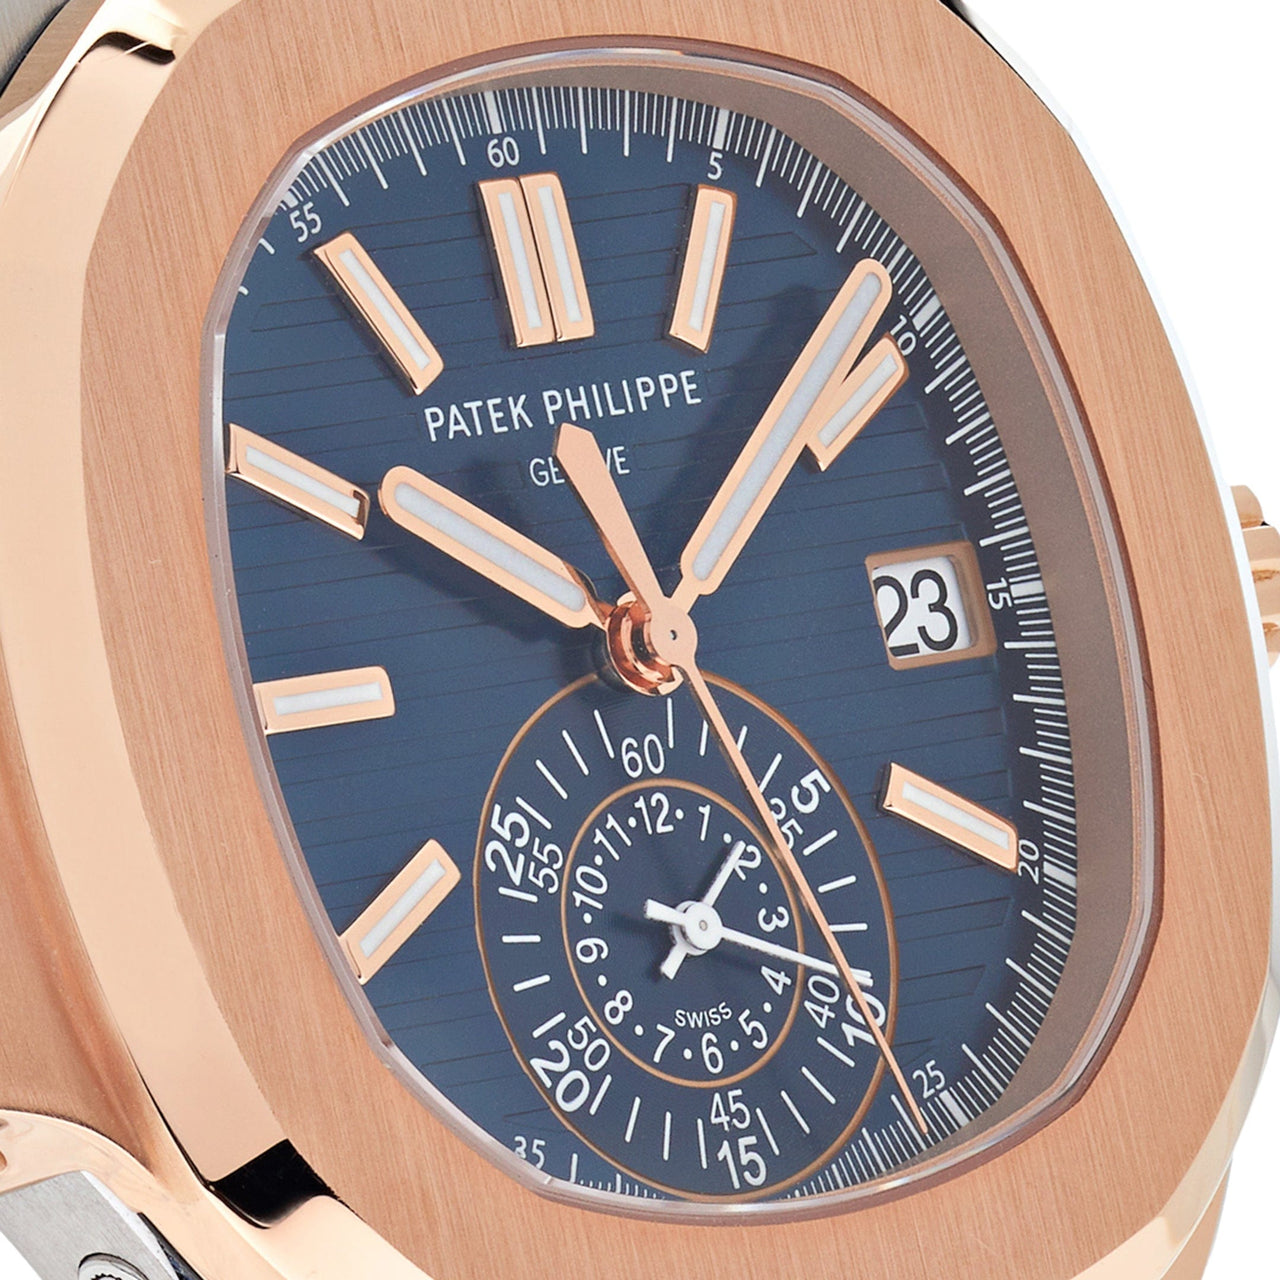 Luxury Watch Patek Philippe Nautilus Chronograph Steel & Rose Gold Blue Dial 5980/1AR-001 Wrist Aficionado